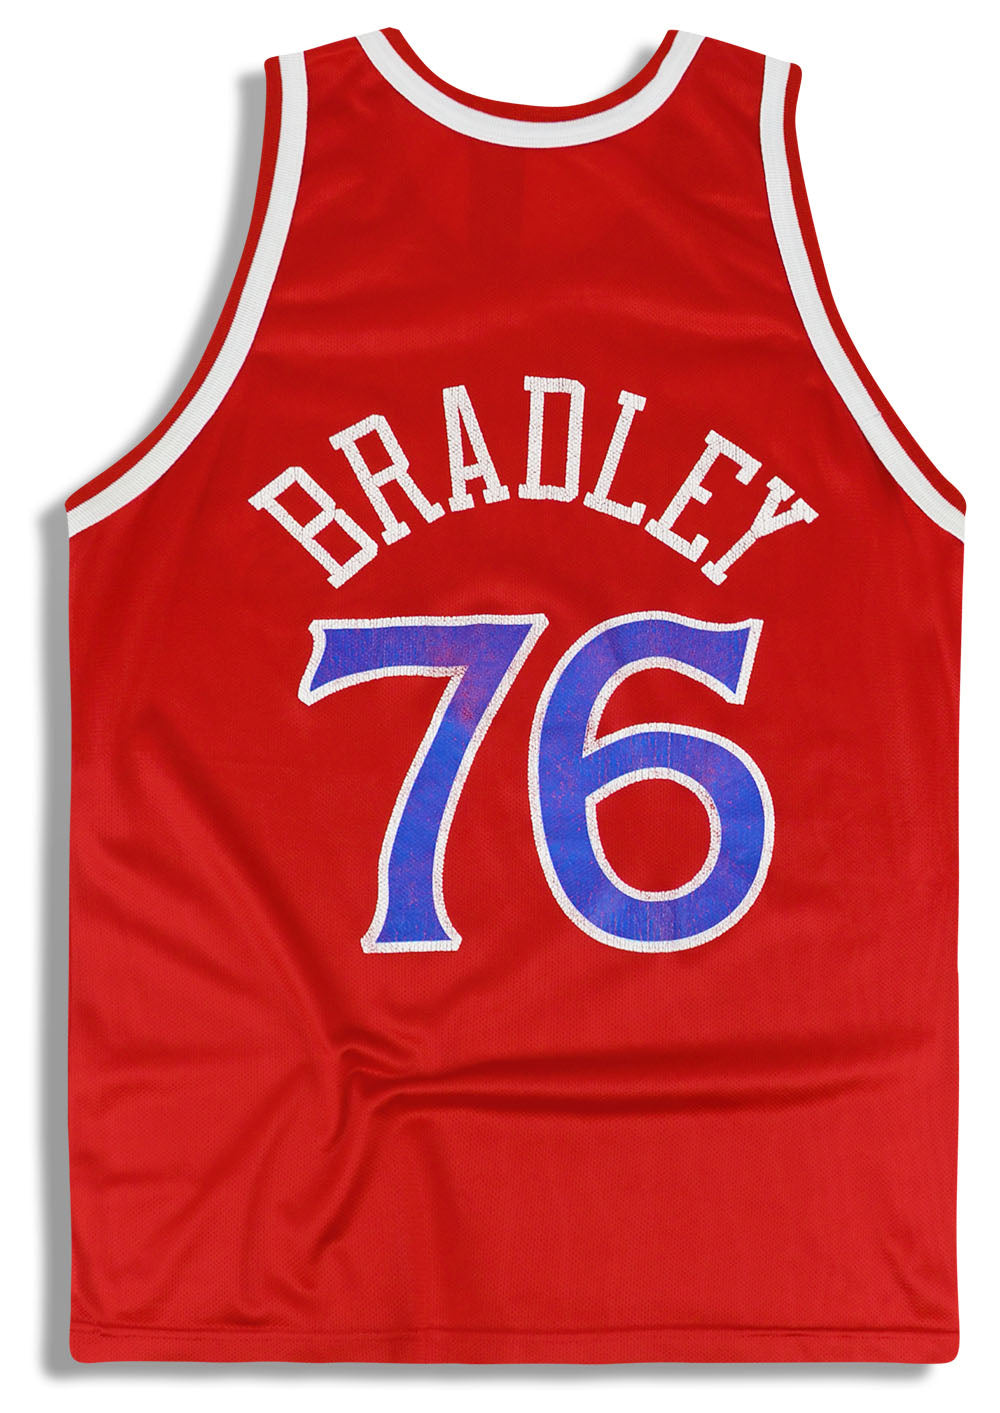 1994-95 PHILADELPHIA 76ERS BRADLEY #76 CHAMPION JERSEY (AWAY) L